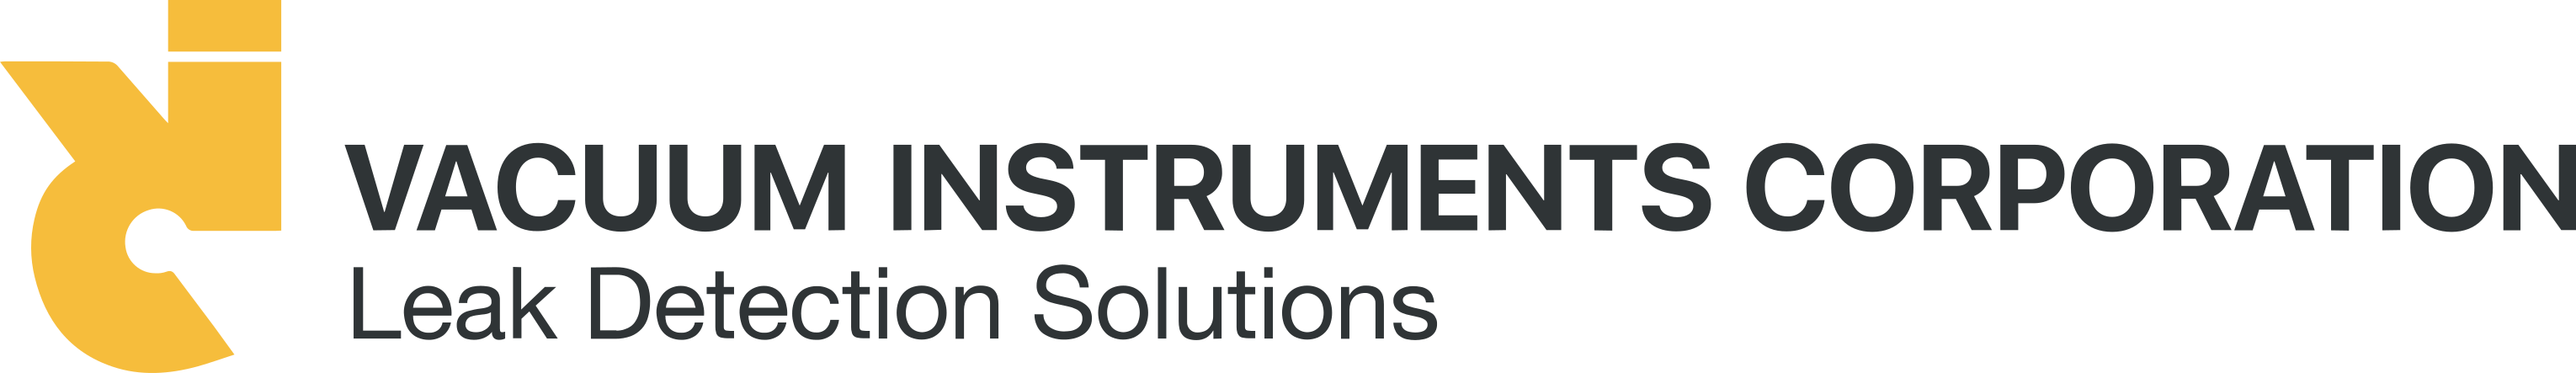 Vacuum Instruments Corporation Logo